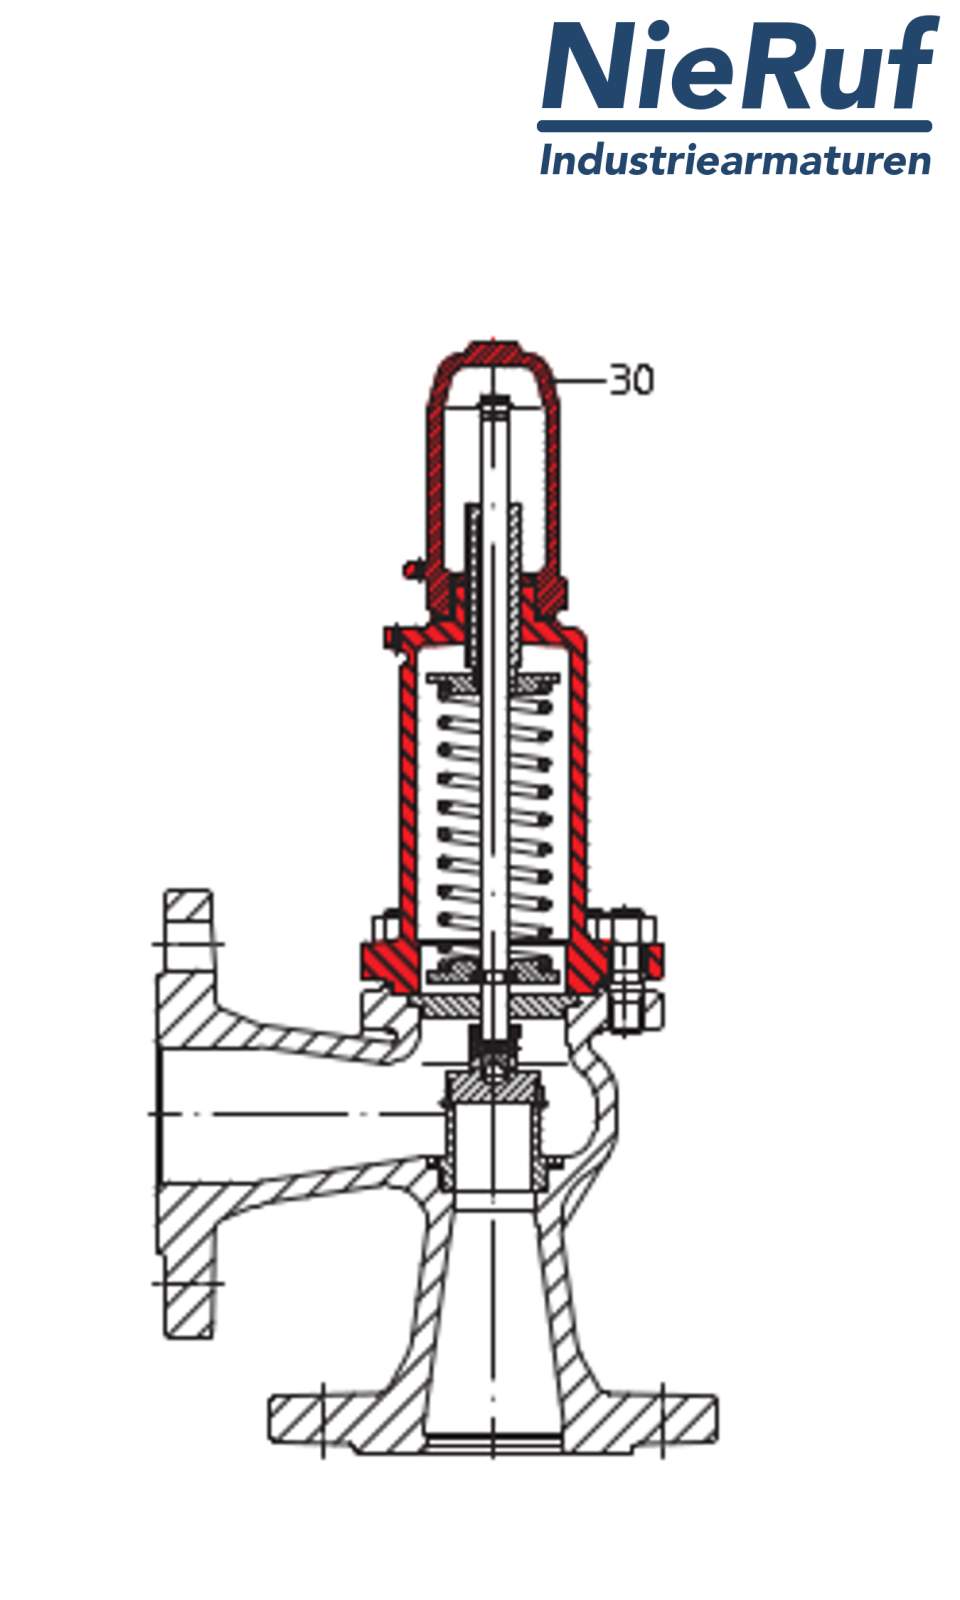 flange-safety valve DN50/DN50 SF0101, cast iron EN-JL1040 FPM, without lever